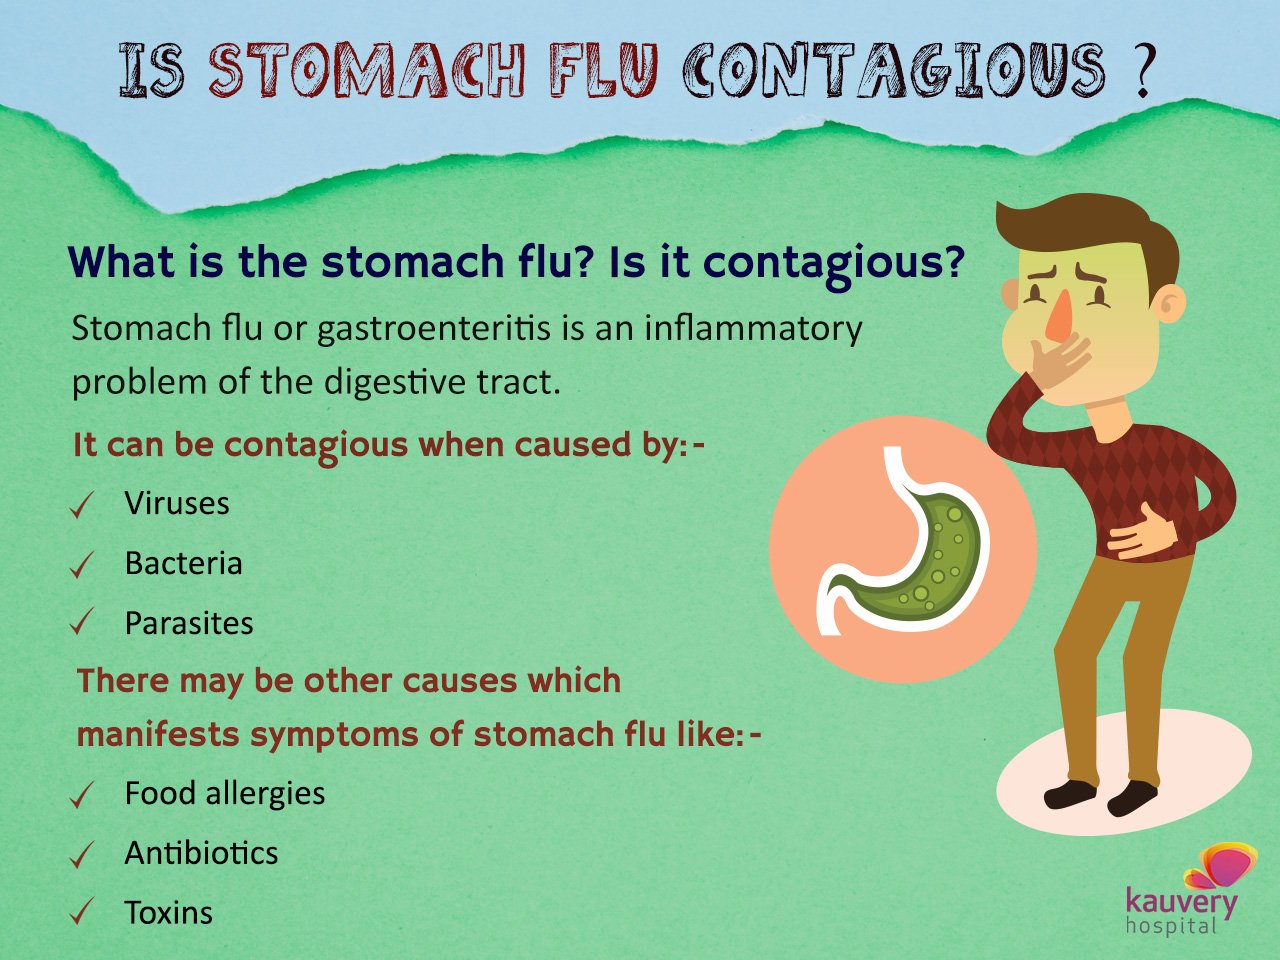 Stomach Flu or Gastroenteritis